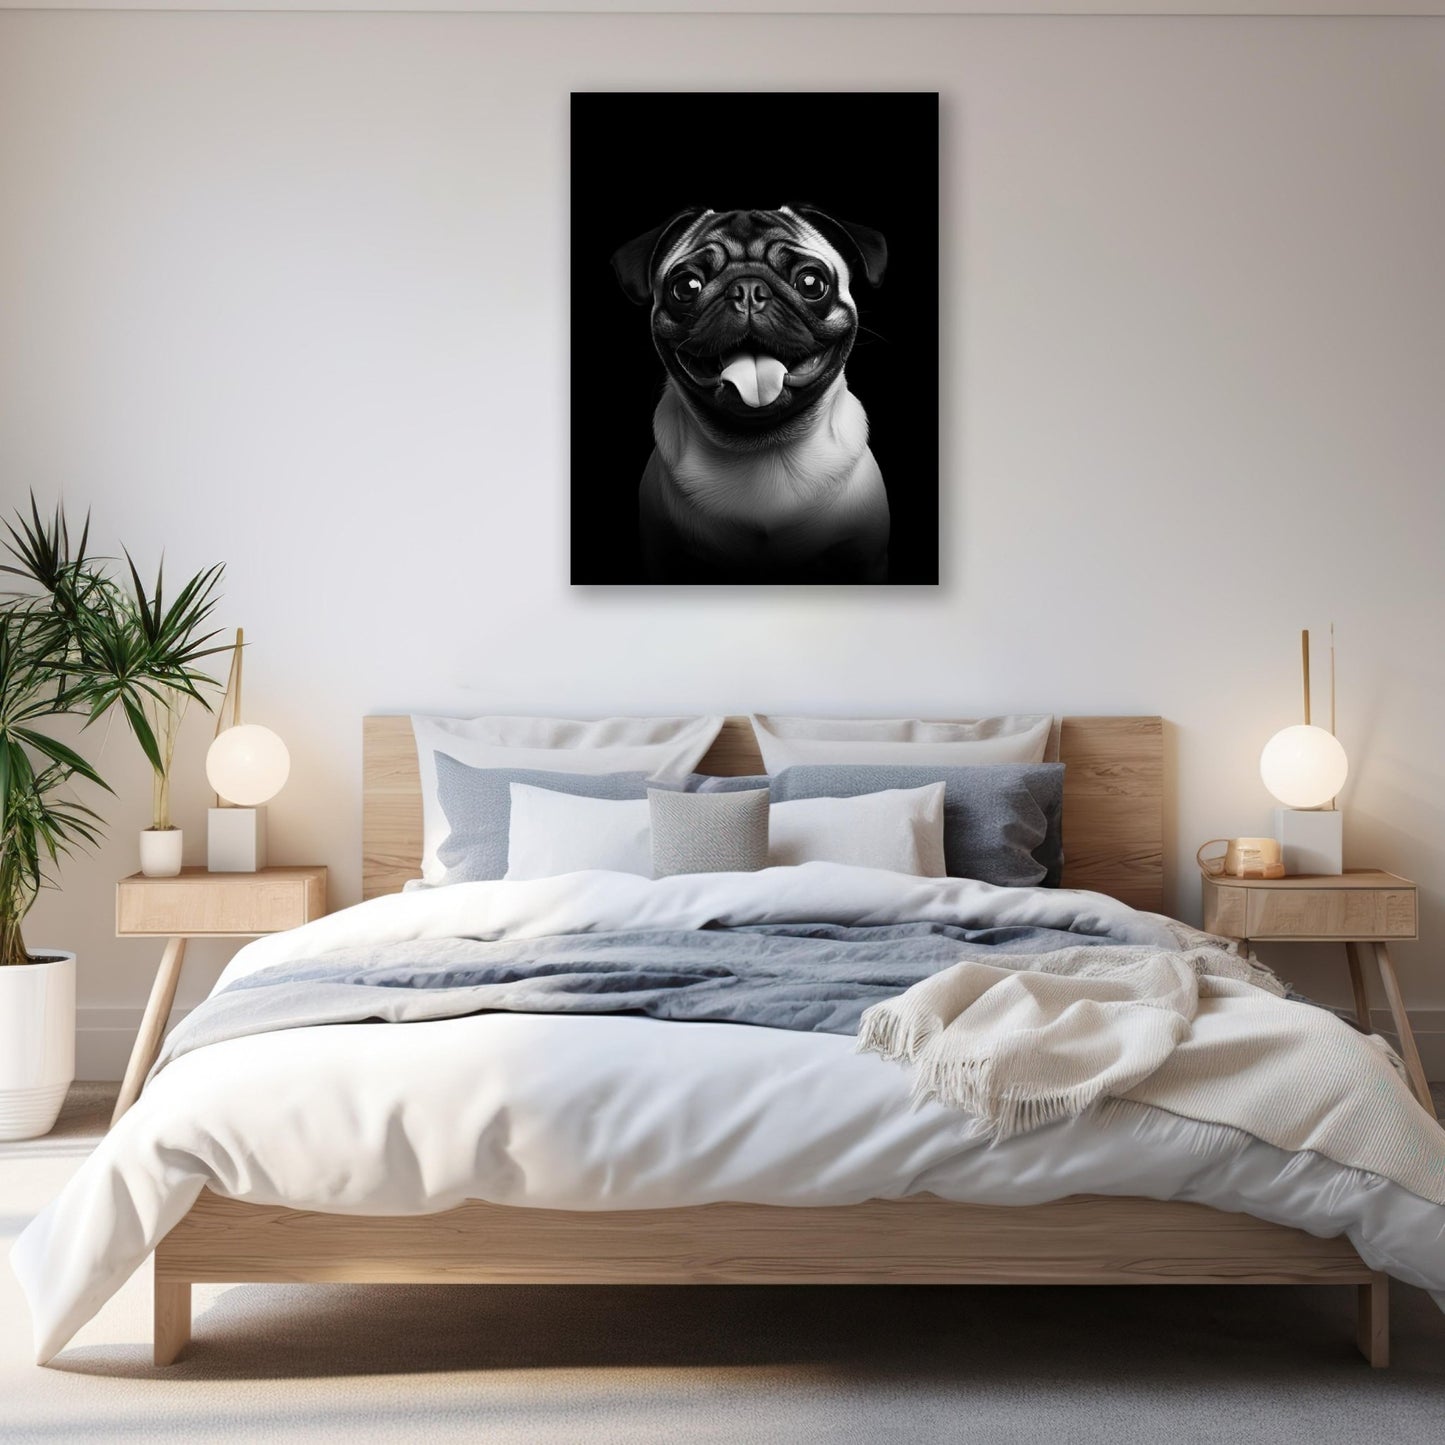 Dog - Pug Portrait - Atka Inspirations